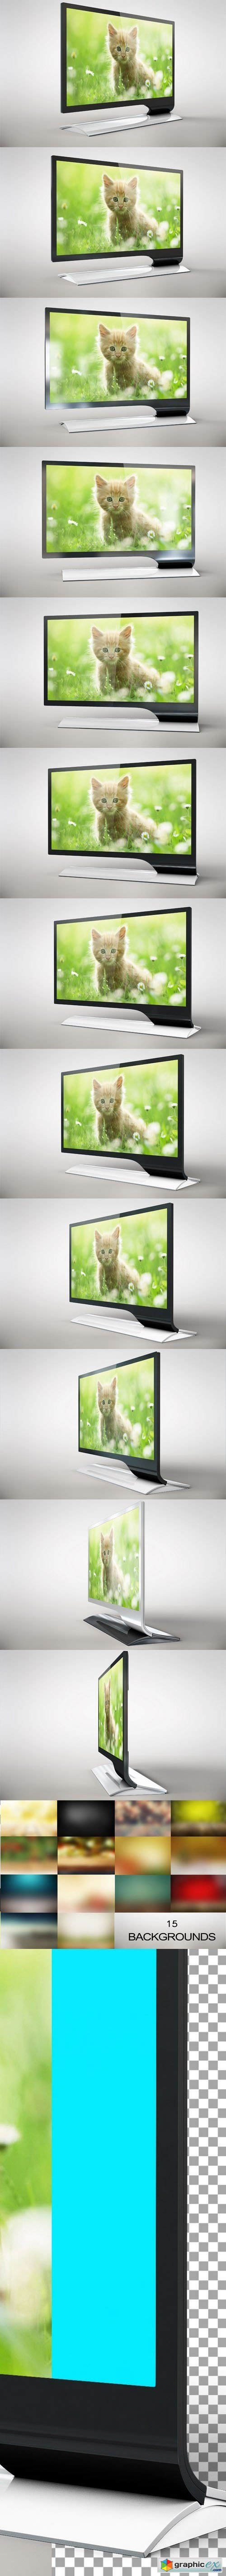 Bundle Samsung Serie 7 LED Monitor